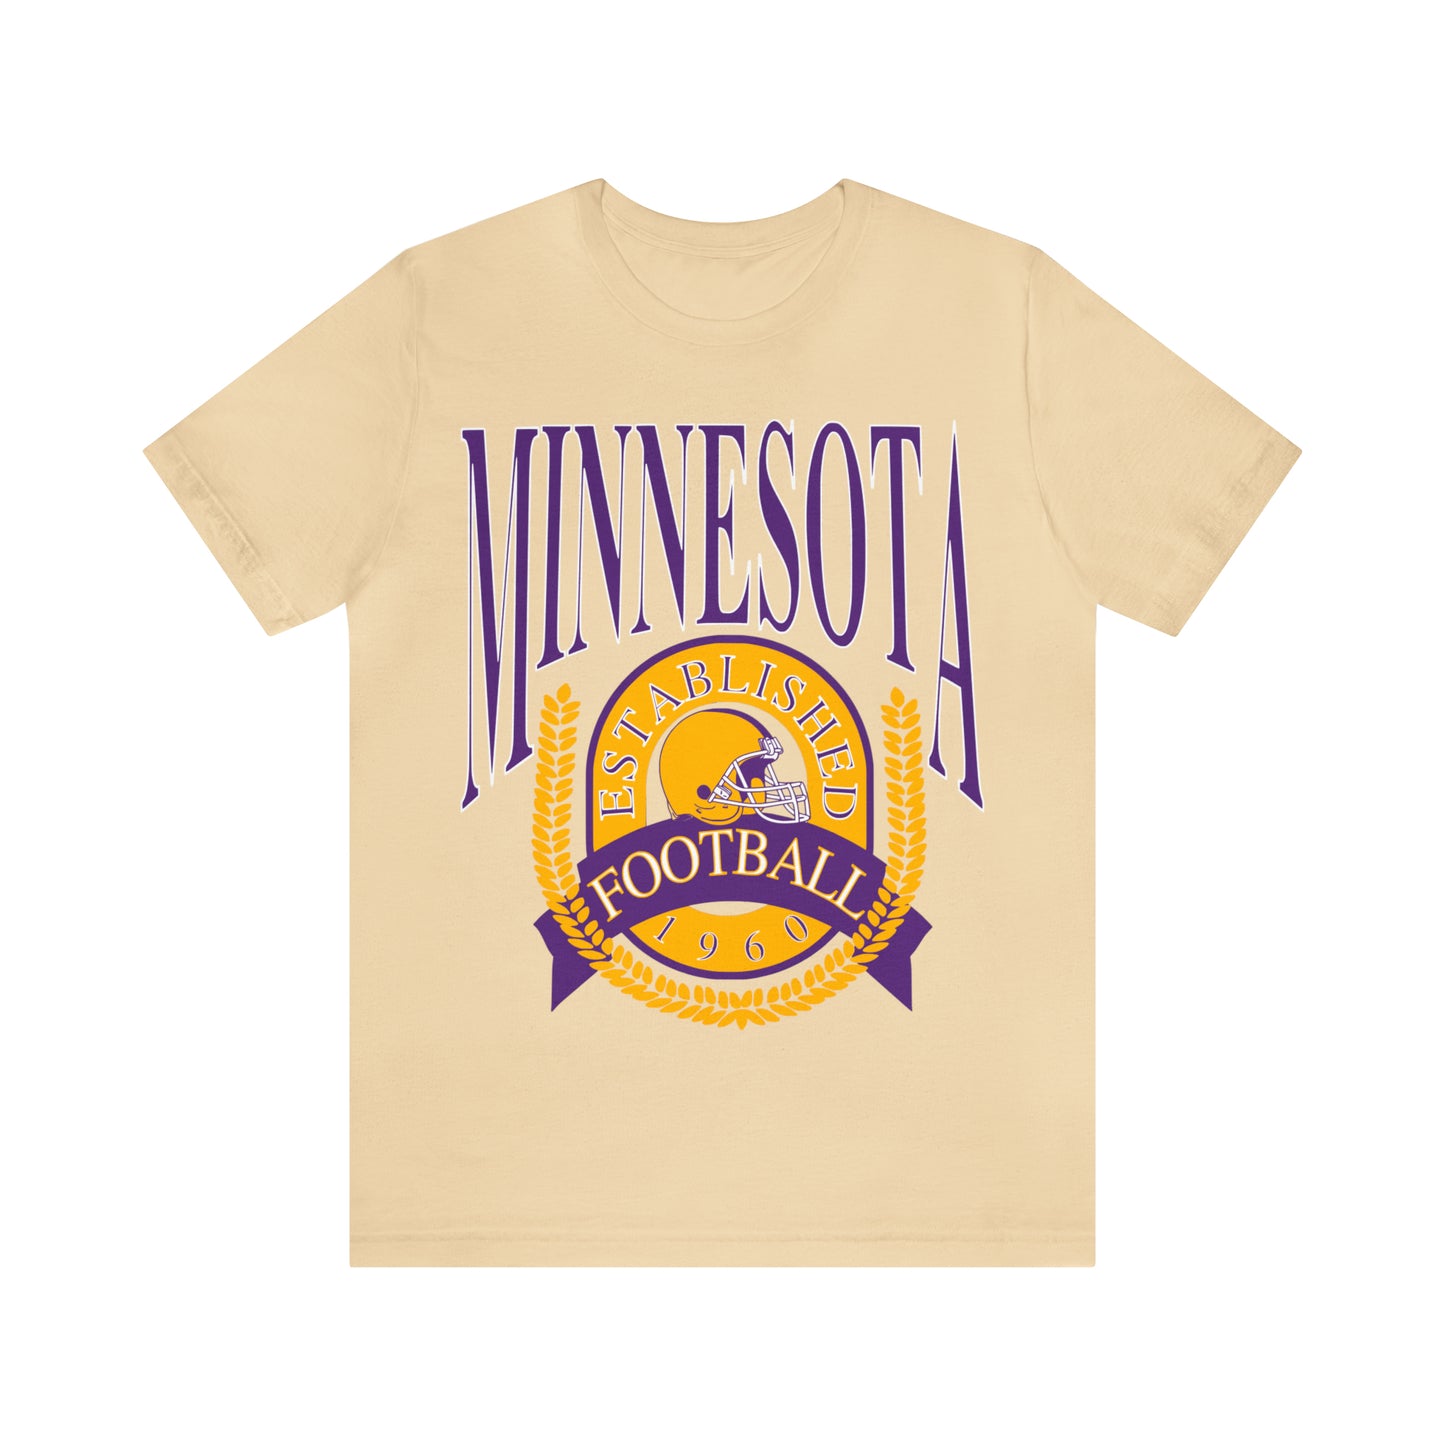 Throwback Vintage Minnesota Vikings Tee - 90's Short Sleeve T-Shirt - NFL Football Men's & Women's Apparel - Design 1